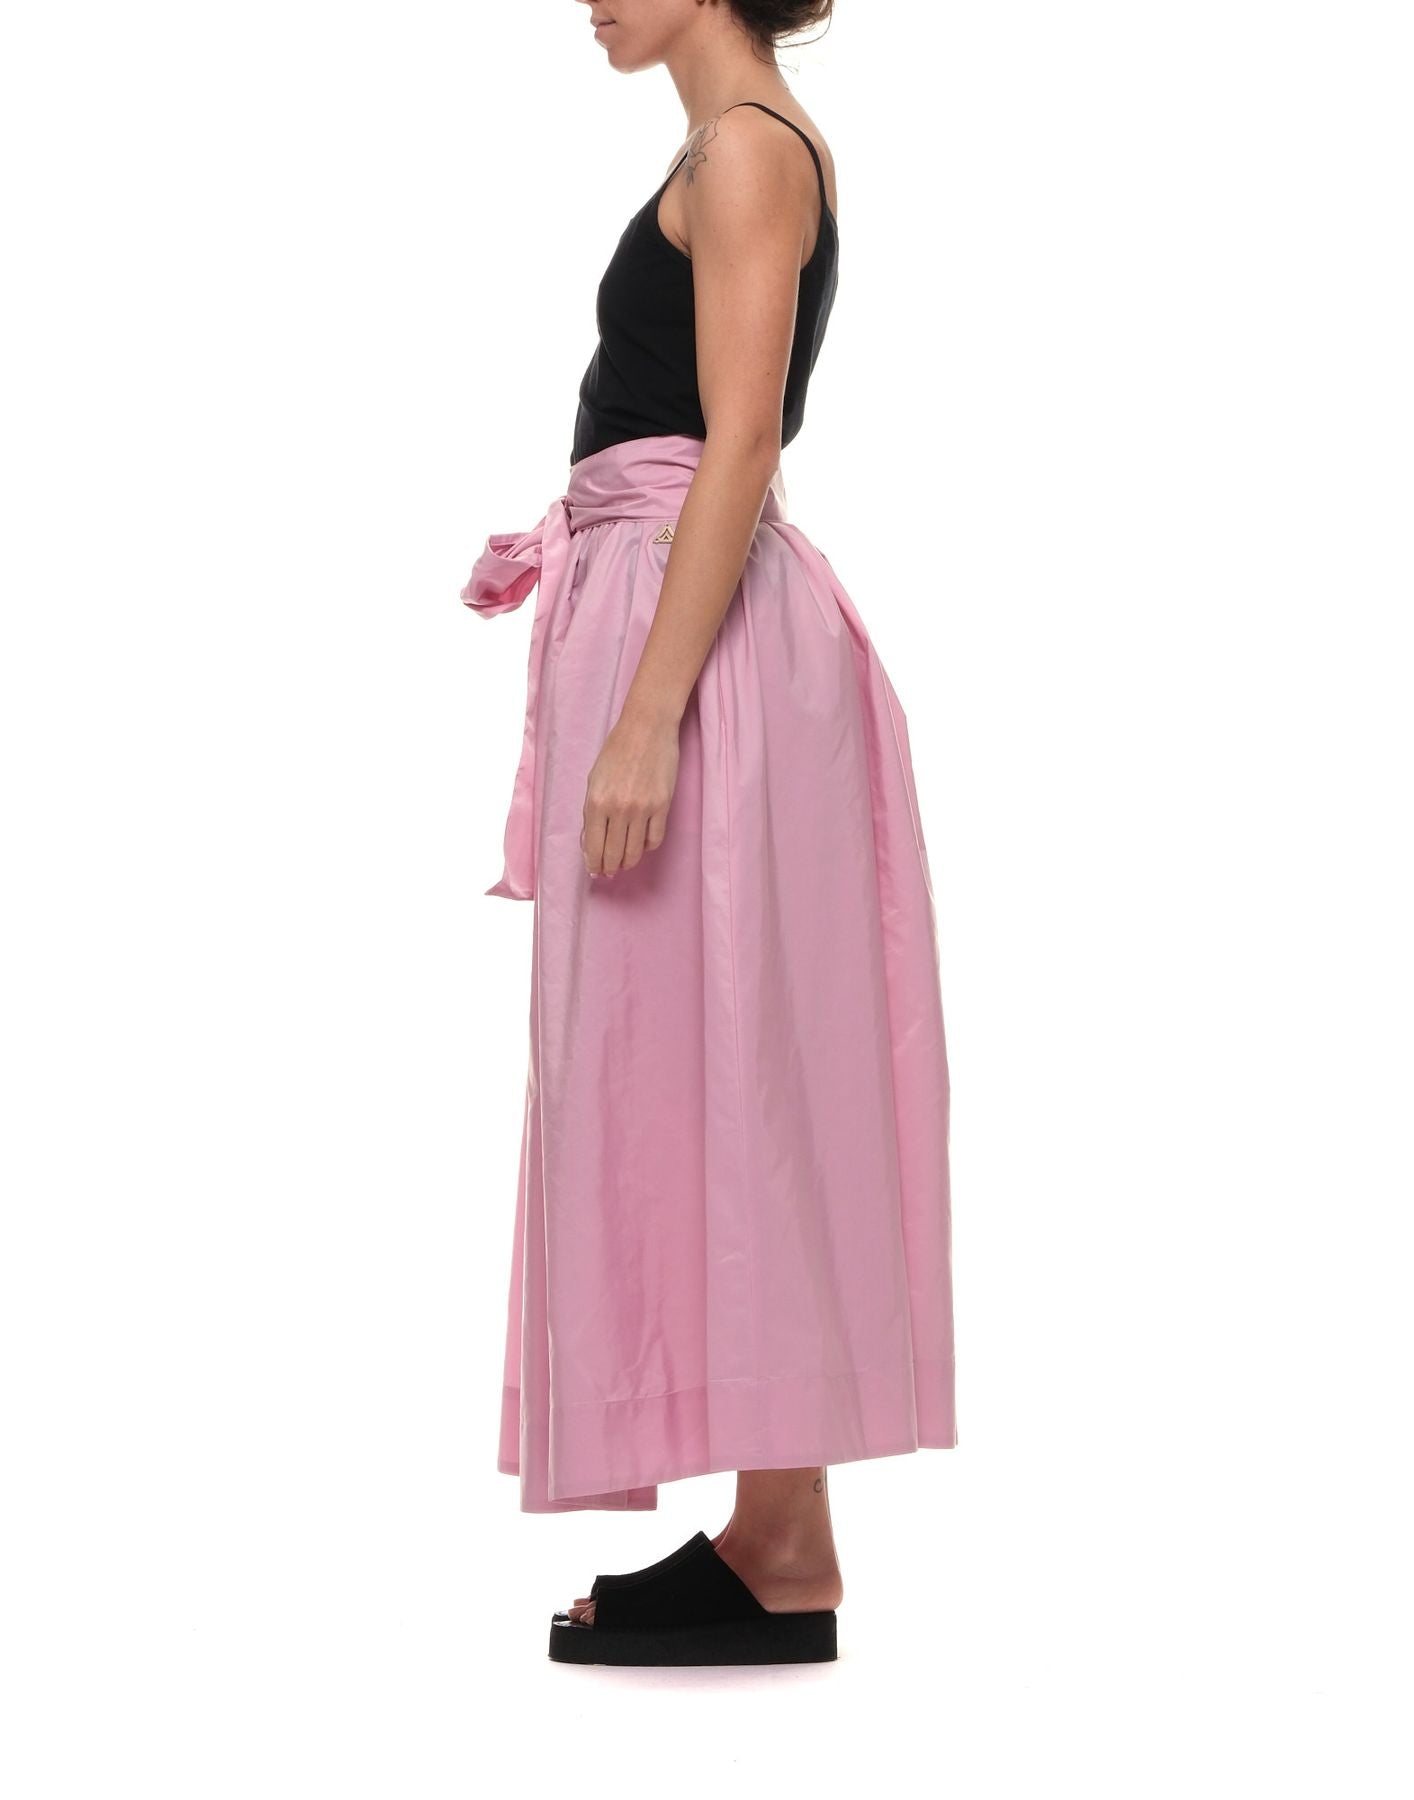 Skirt woman GOKD05146 ROSA Akep